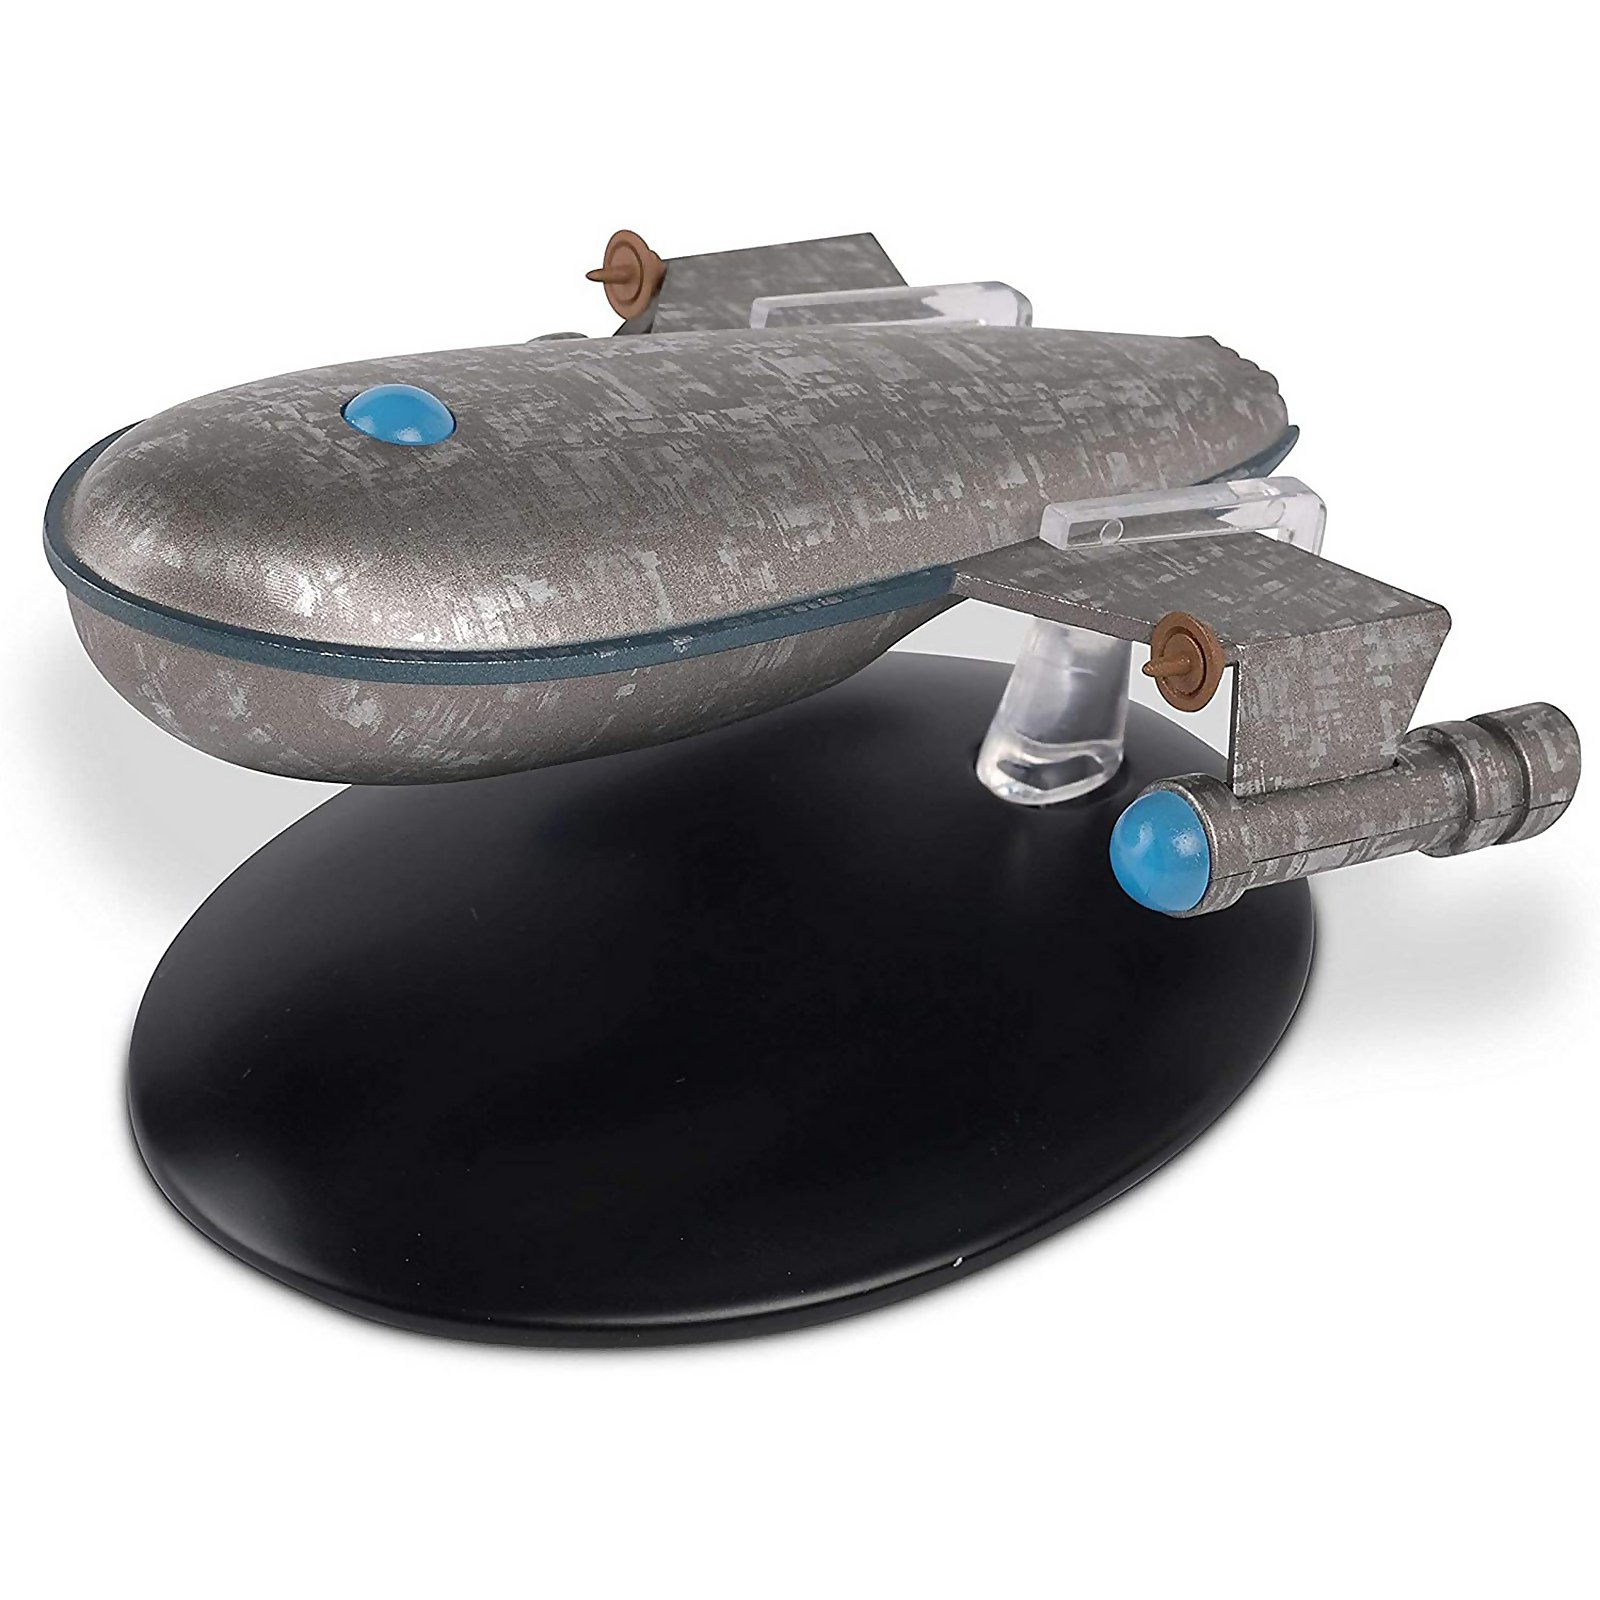 Réplica de la nave de Star Trek de Eaglemoss - Modelo de nave estelar de clase J de Harry Mudd